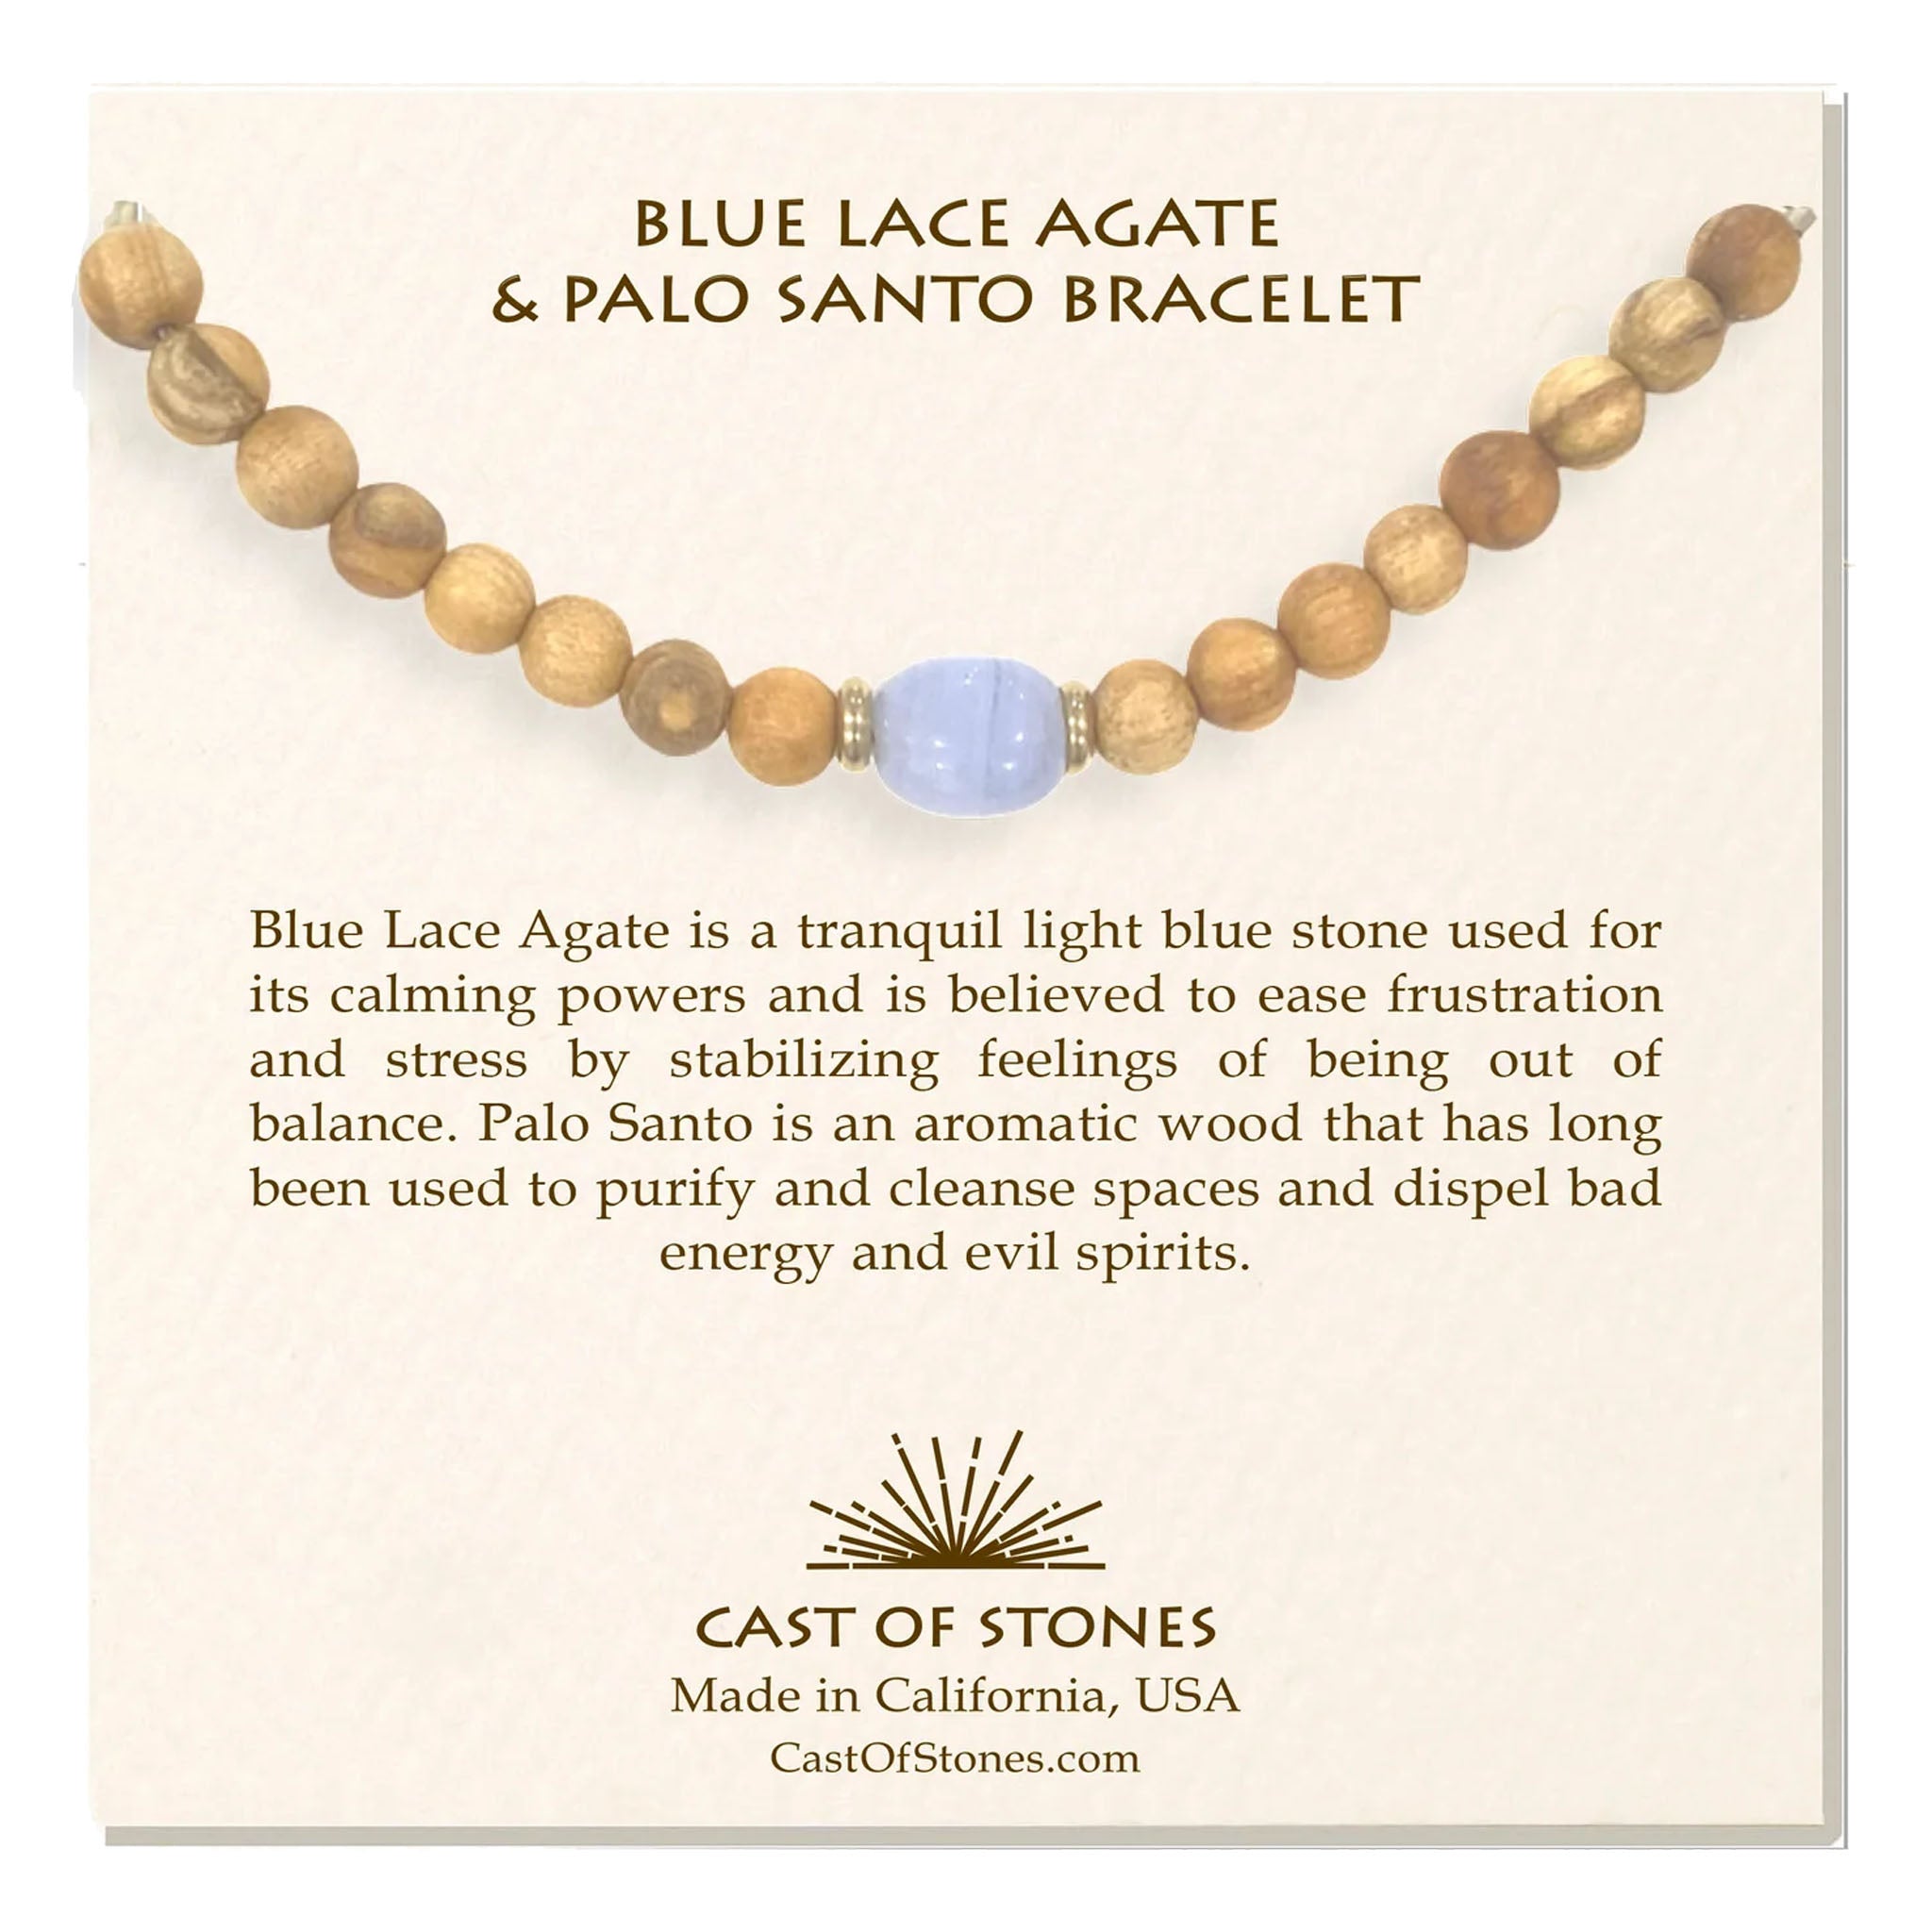 Blue Lace Agate & Palo Santo Bracelet